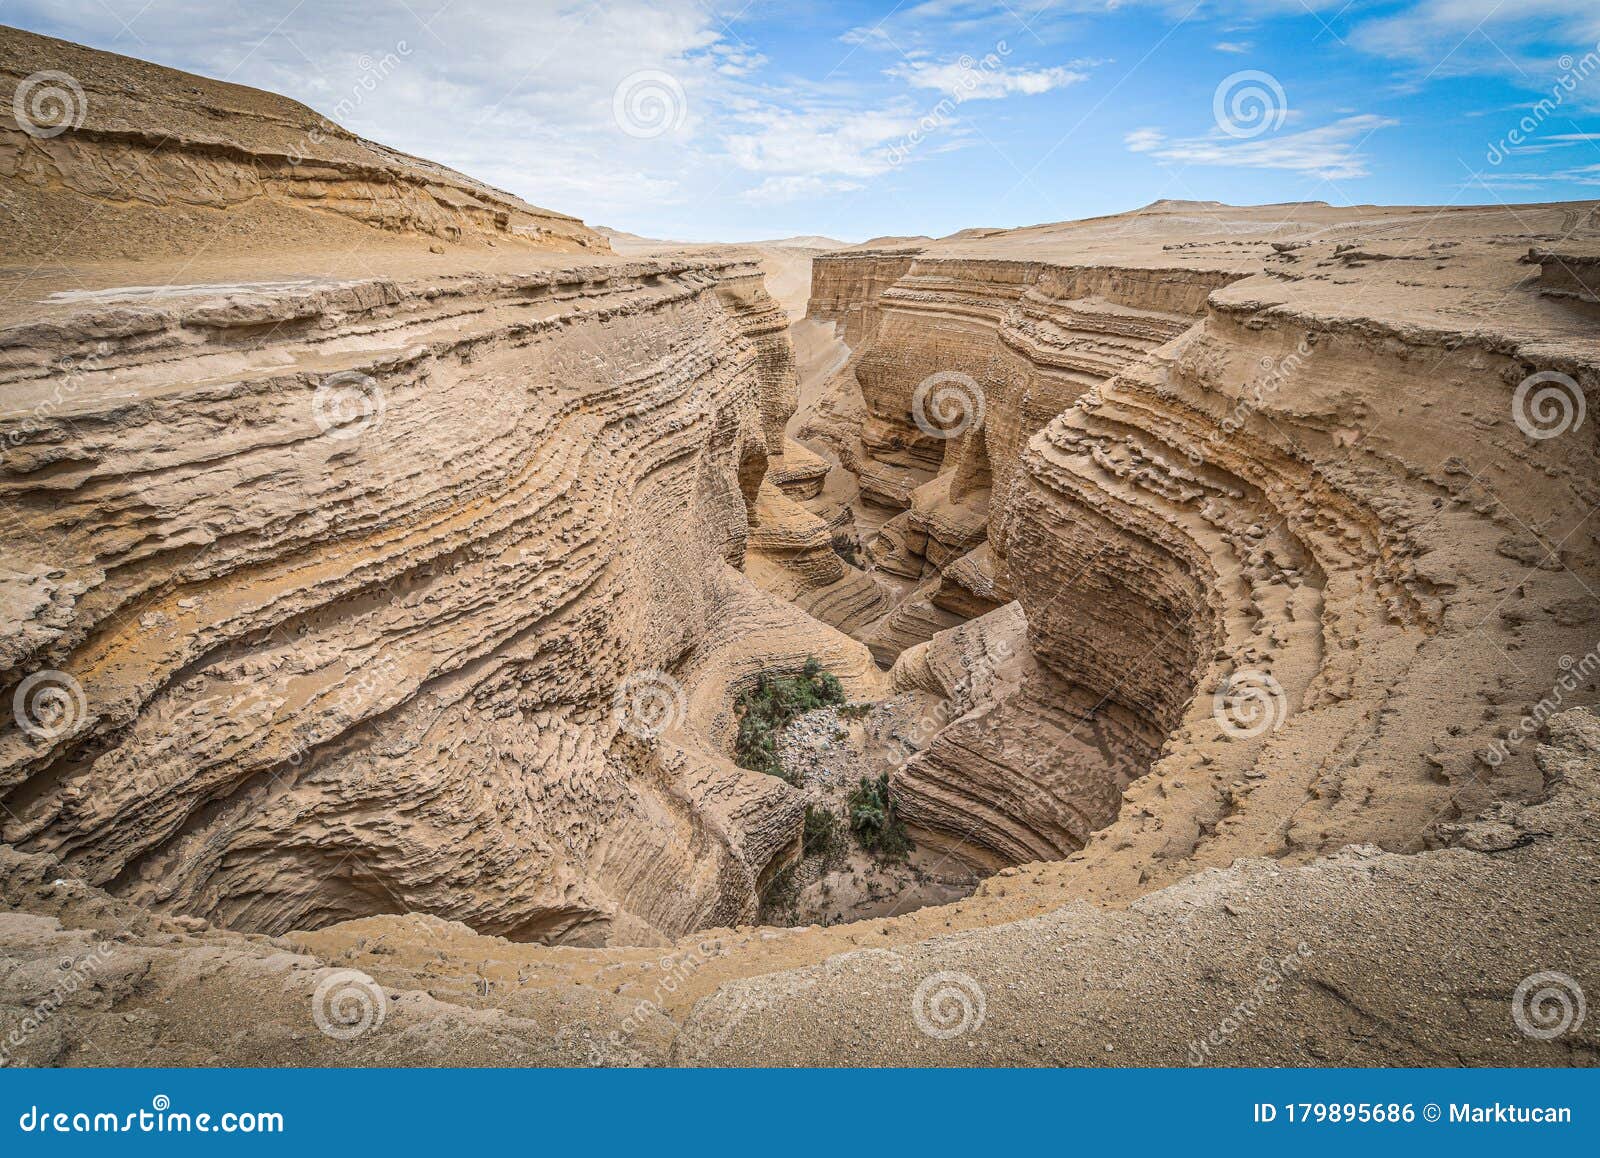 canyon de los perdidos, a stunning natural formation in the nazca desert, peru